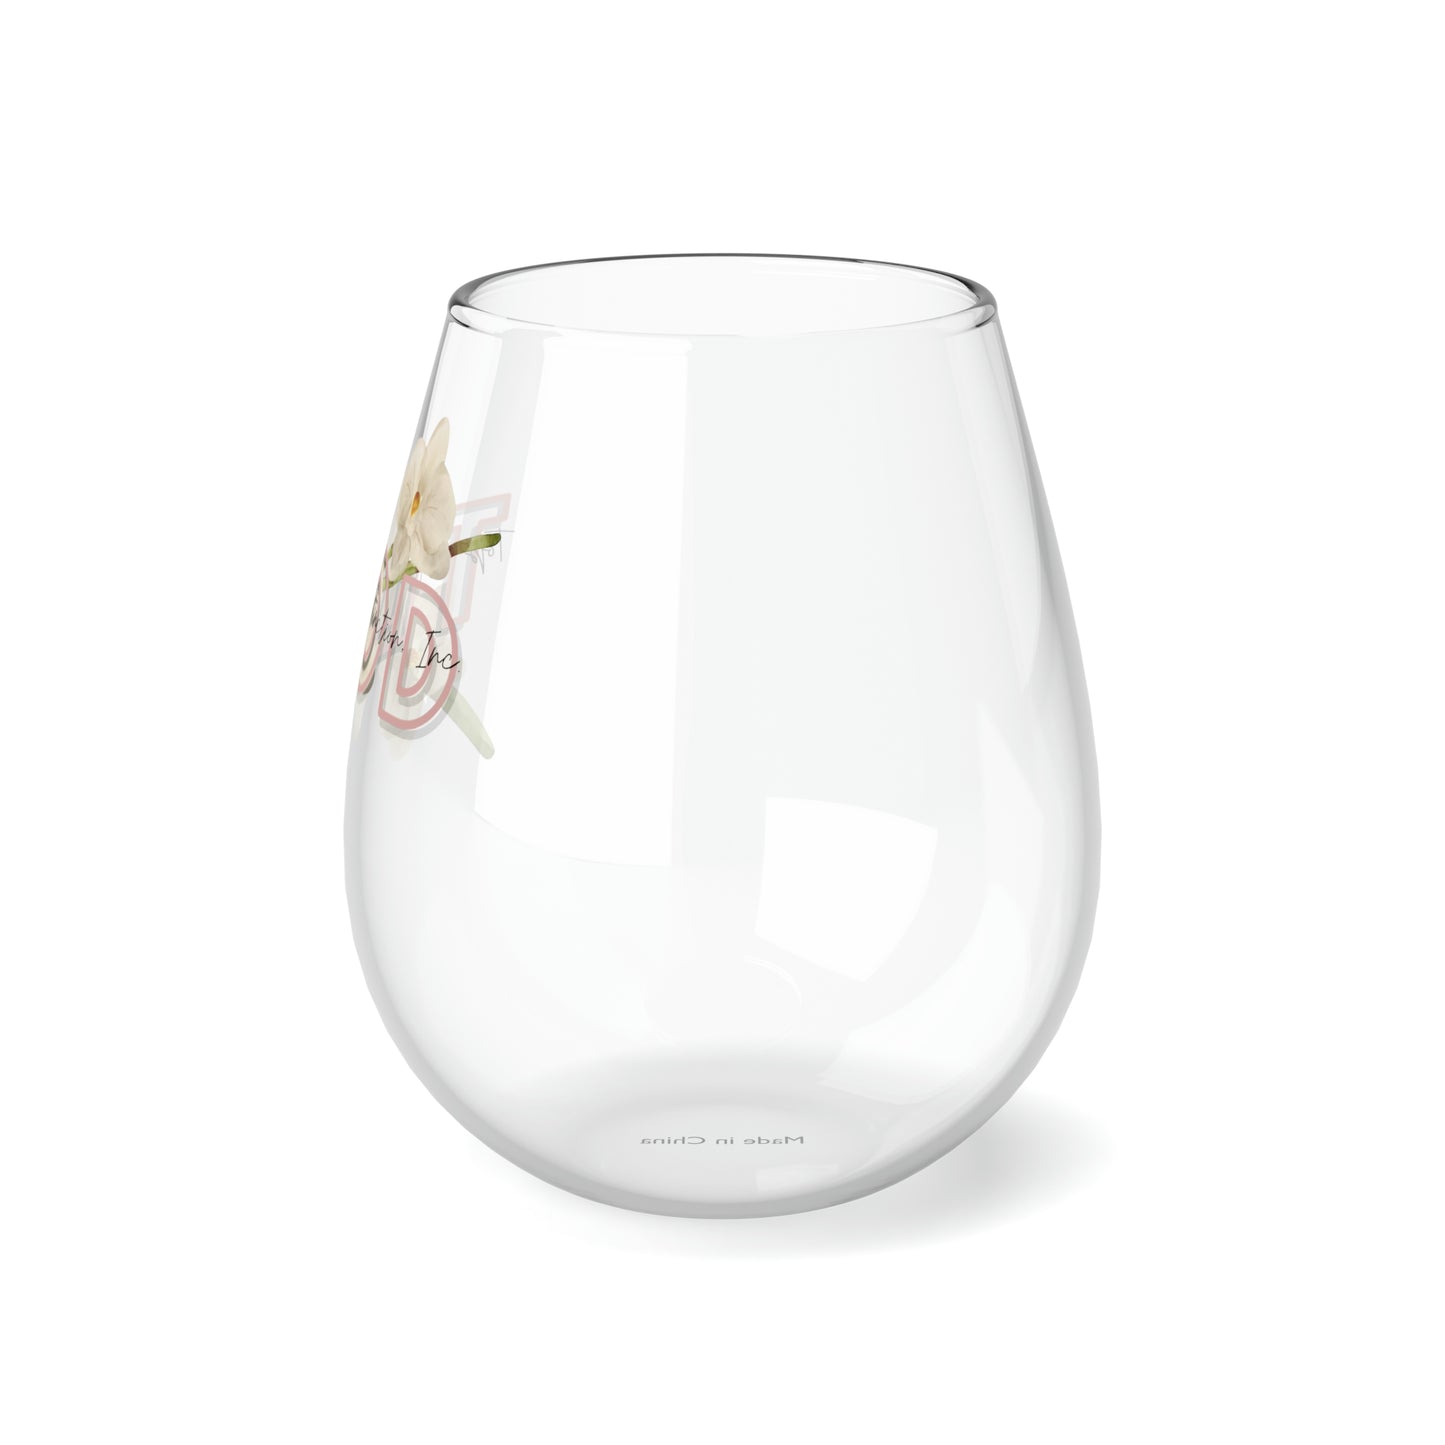 TLOD Stemless Wine Glass, 11.75oz